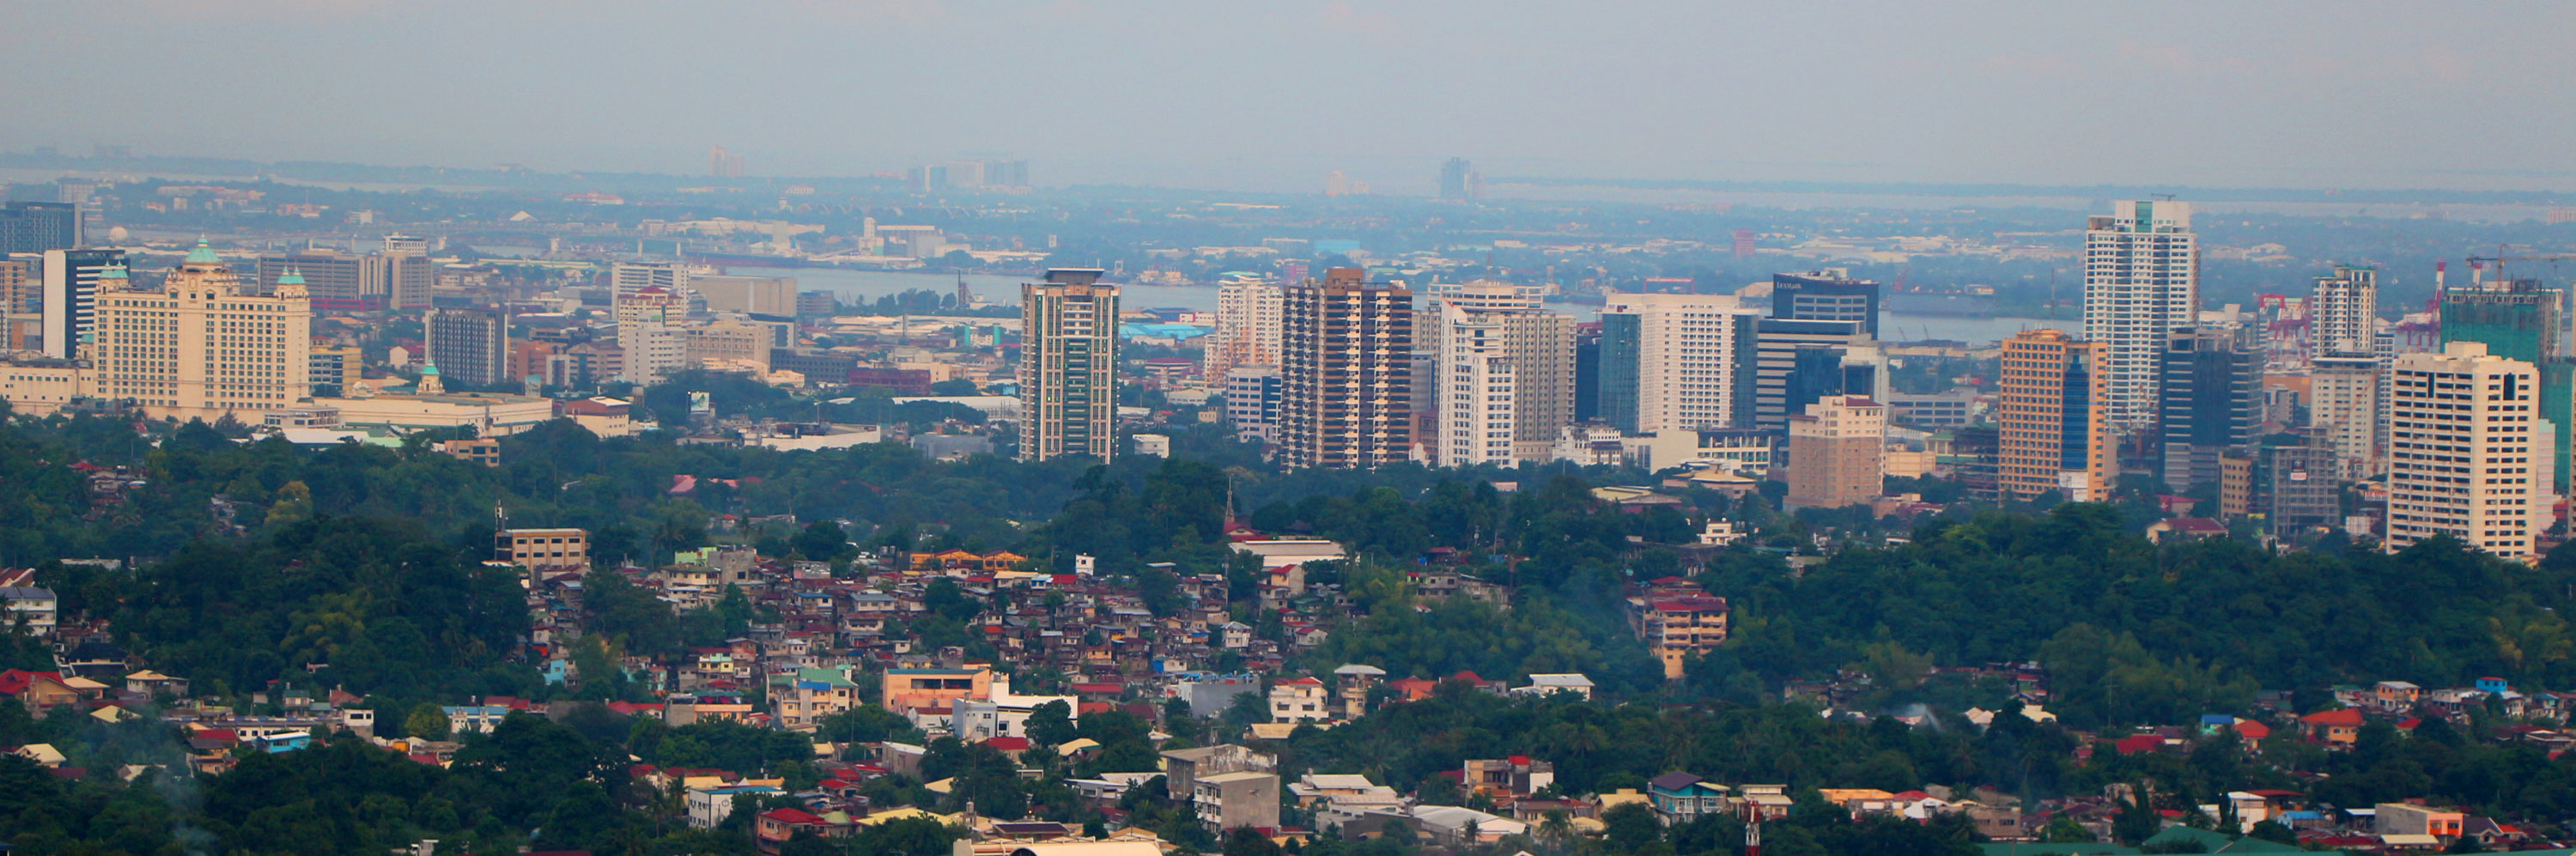 Cebu-city-philippines